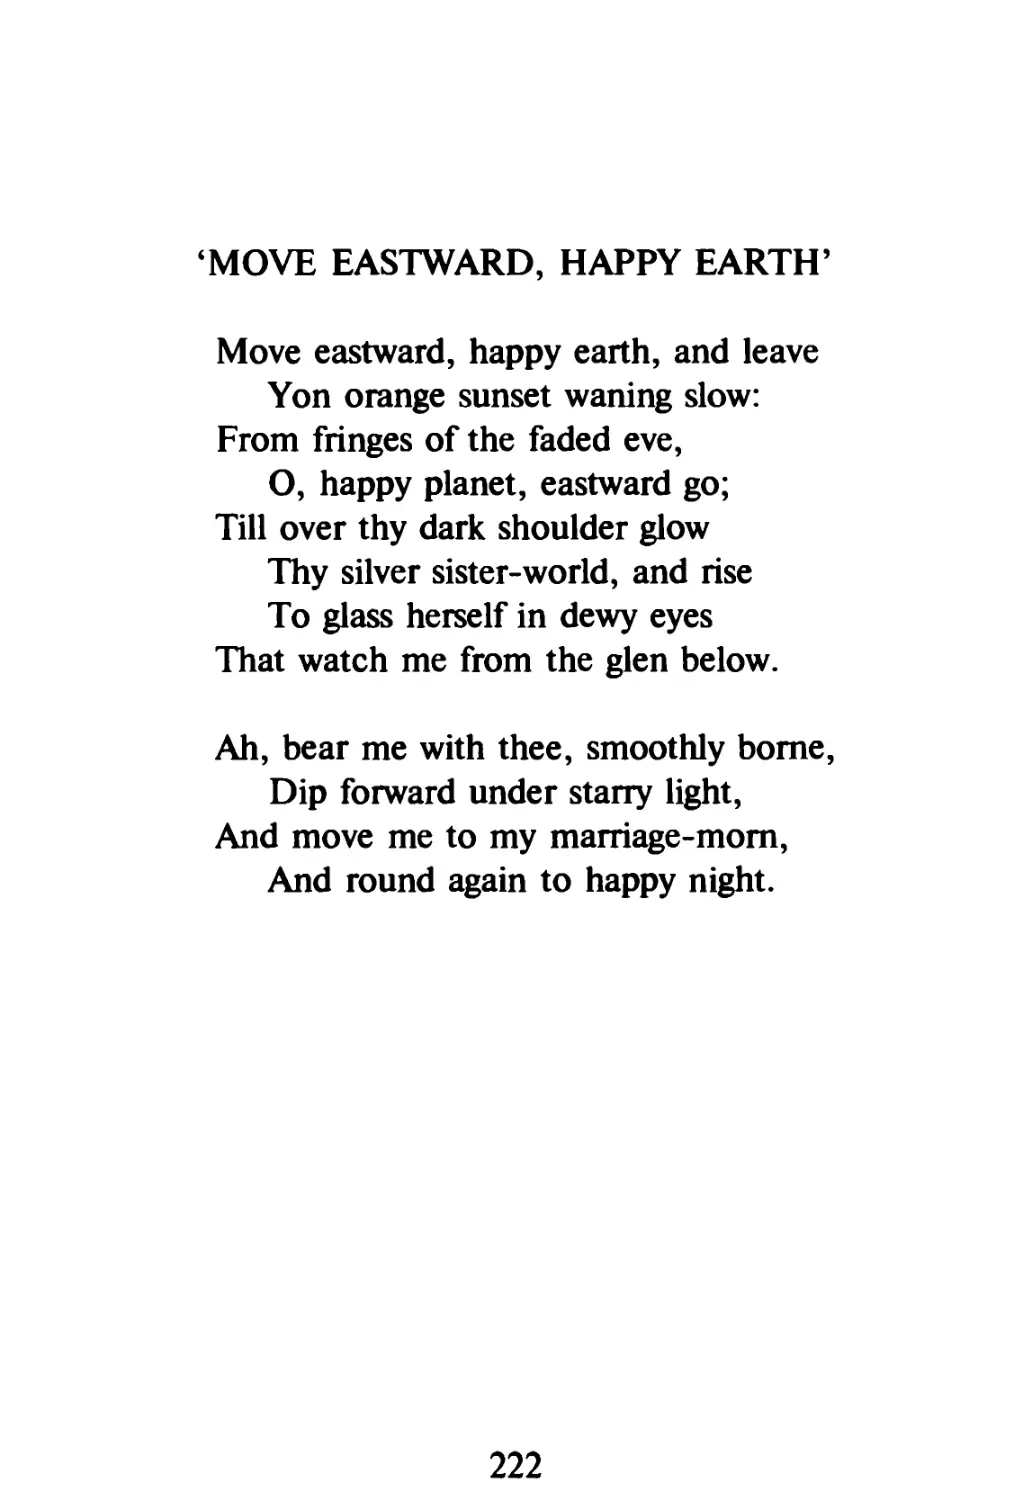 'Move eastward, happy earth'